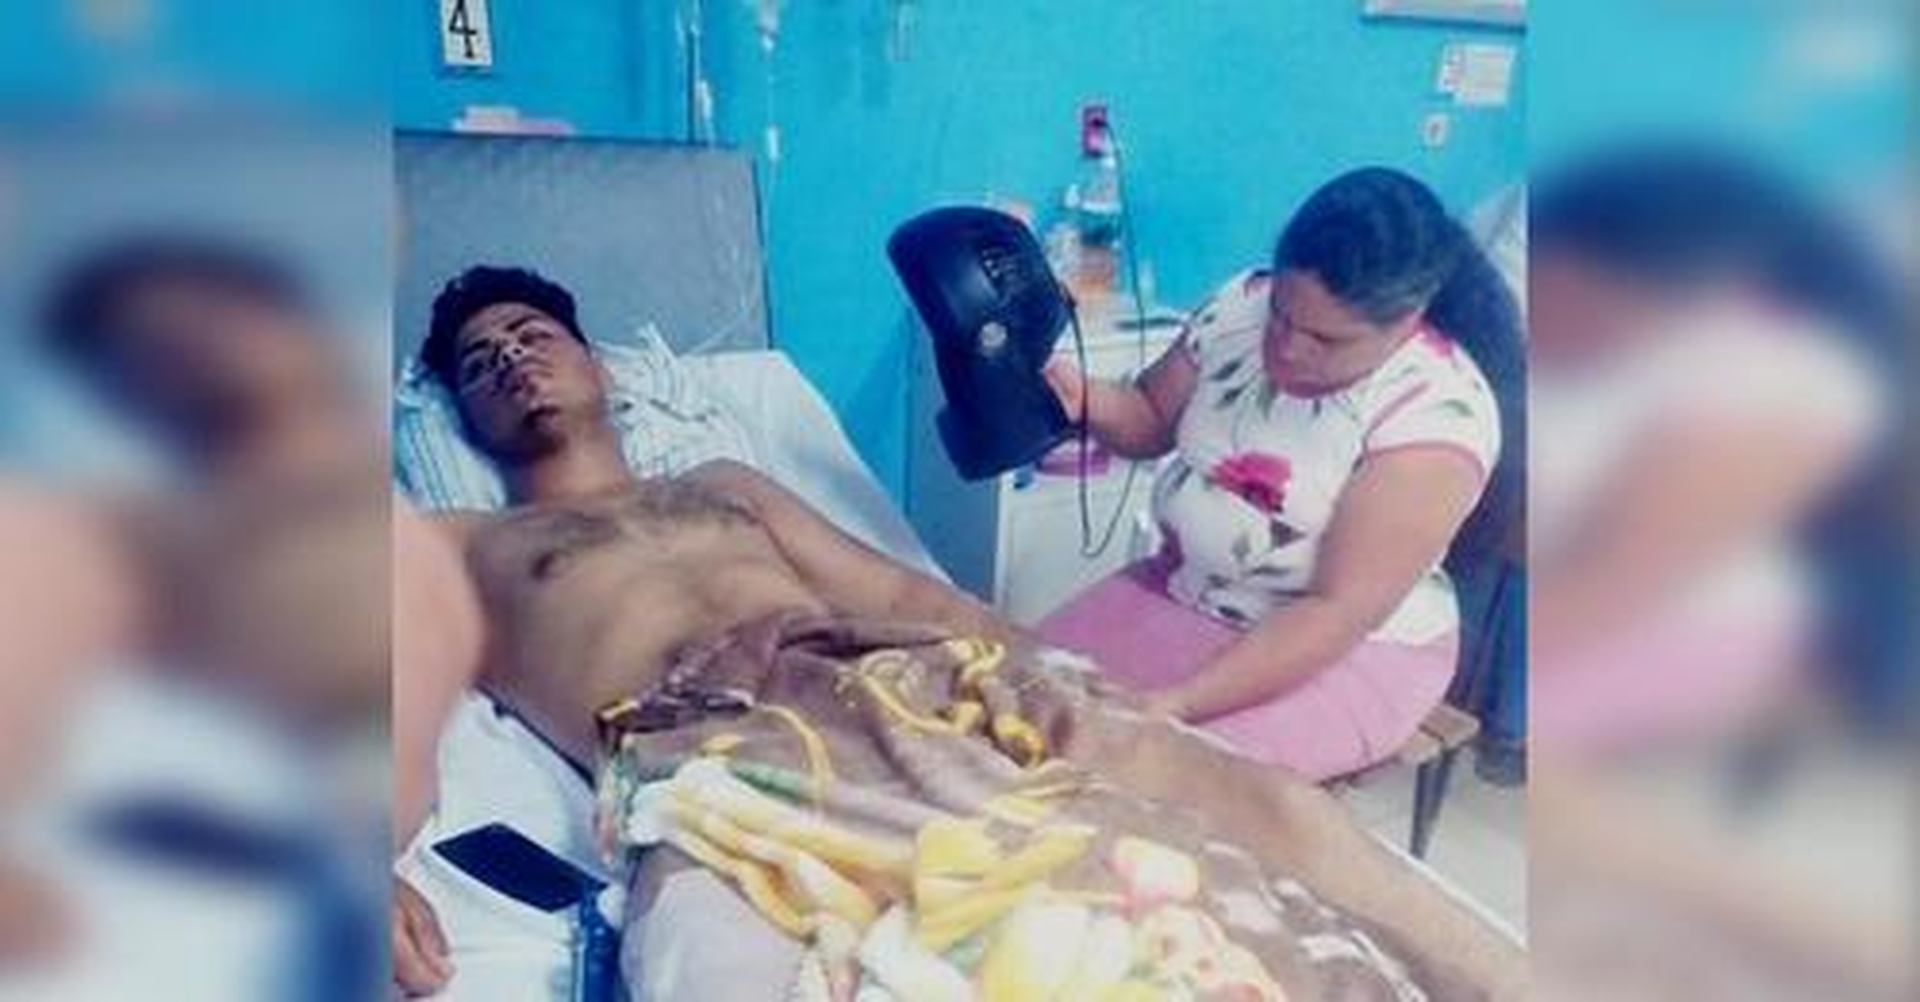 Amputan pierna a joven motociclista que chocó contra una cisterna en La Thompson, Estelí